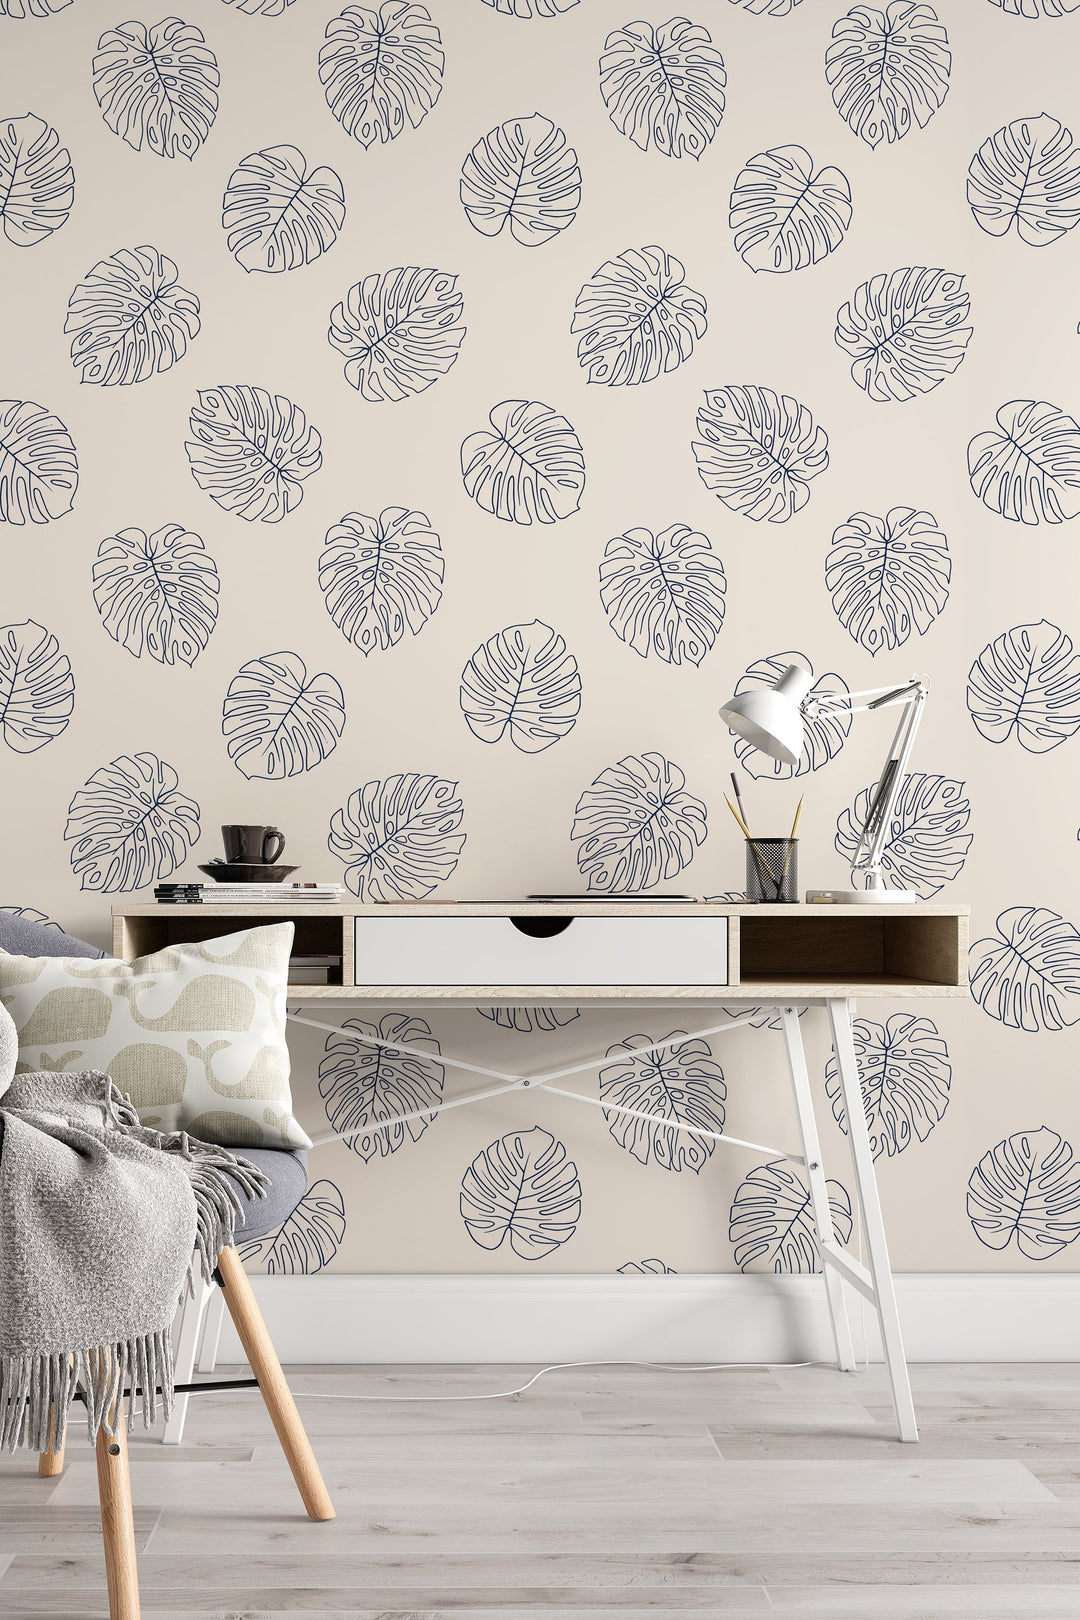 Palm leaves pattern blue on beige background Wallpaper - Removable wallpaper - Vinyl Peel and Stick Wallpaper design #3139